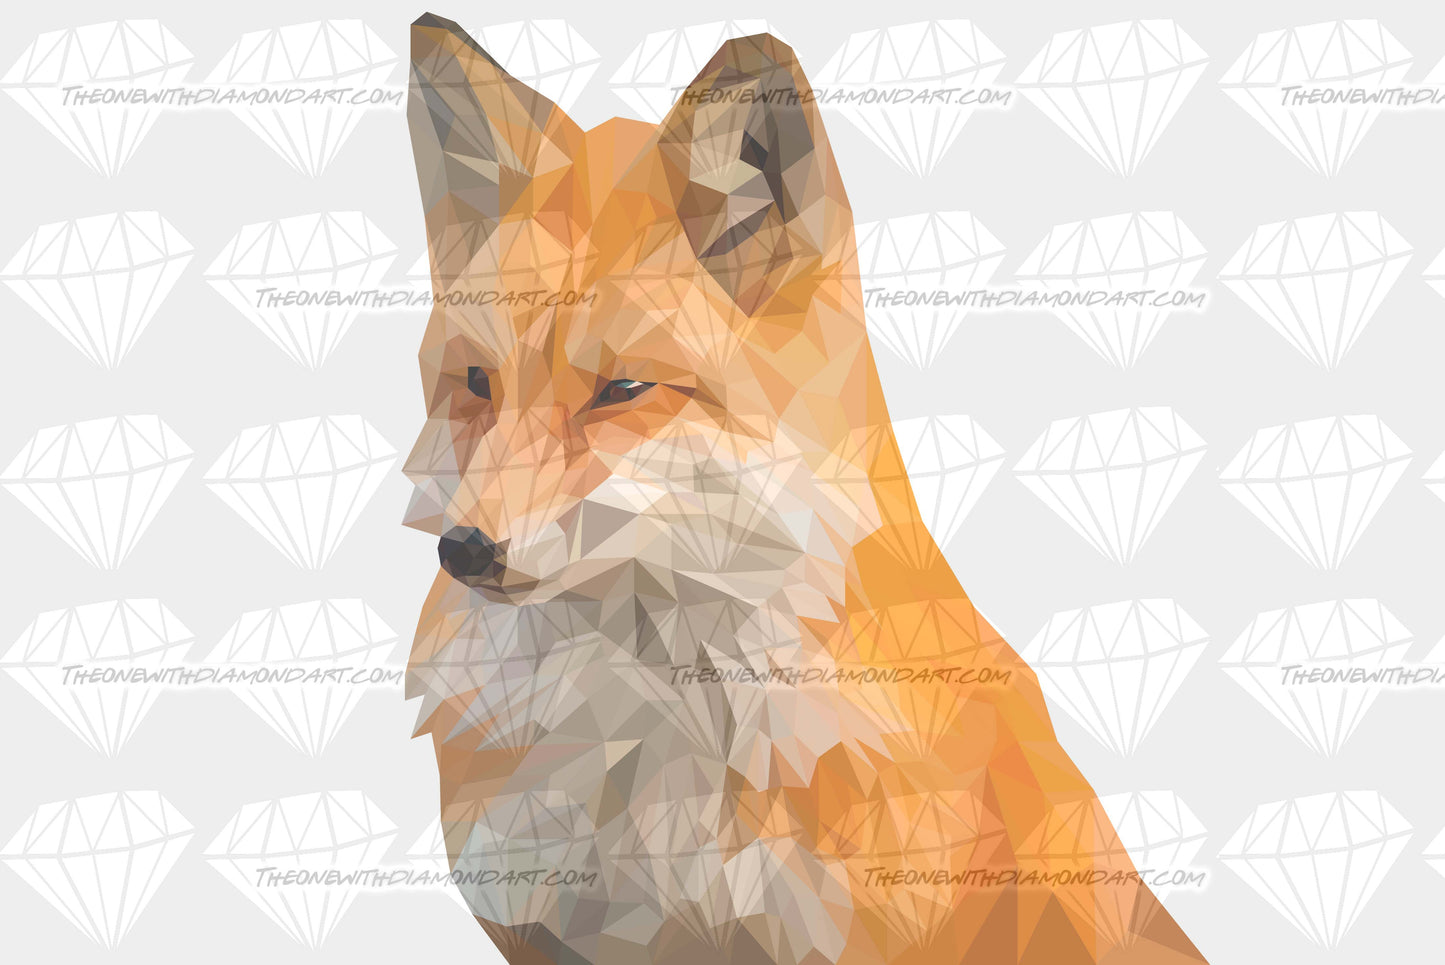 Poly Fox